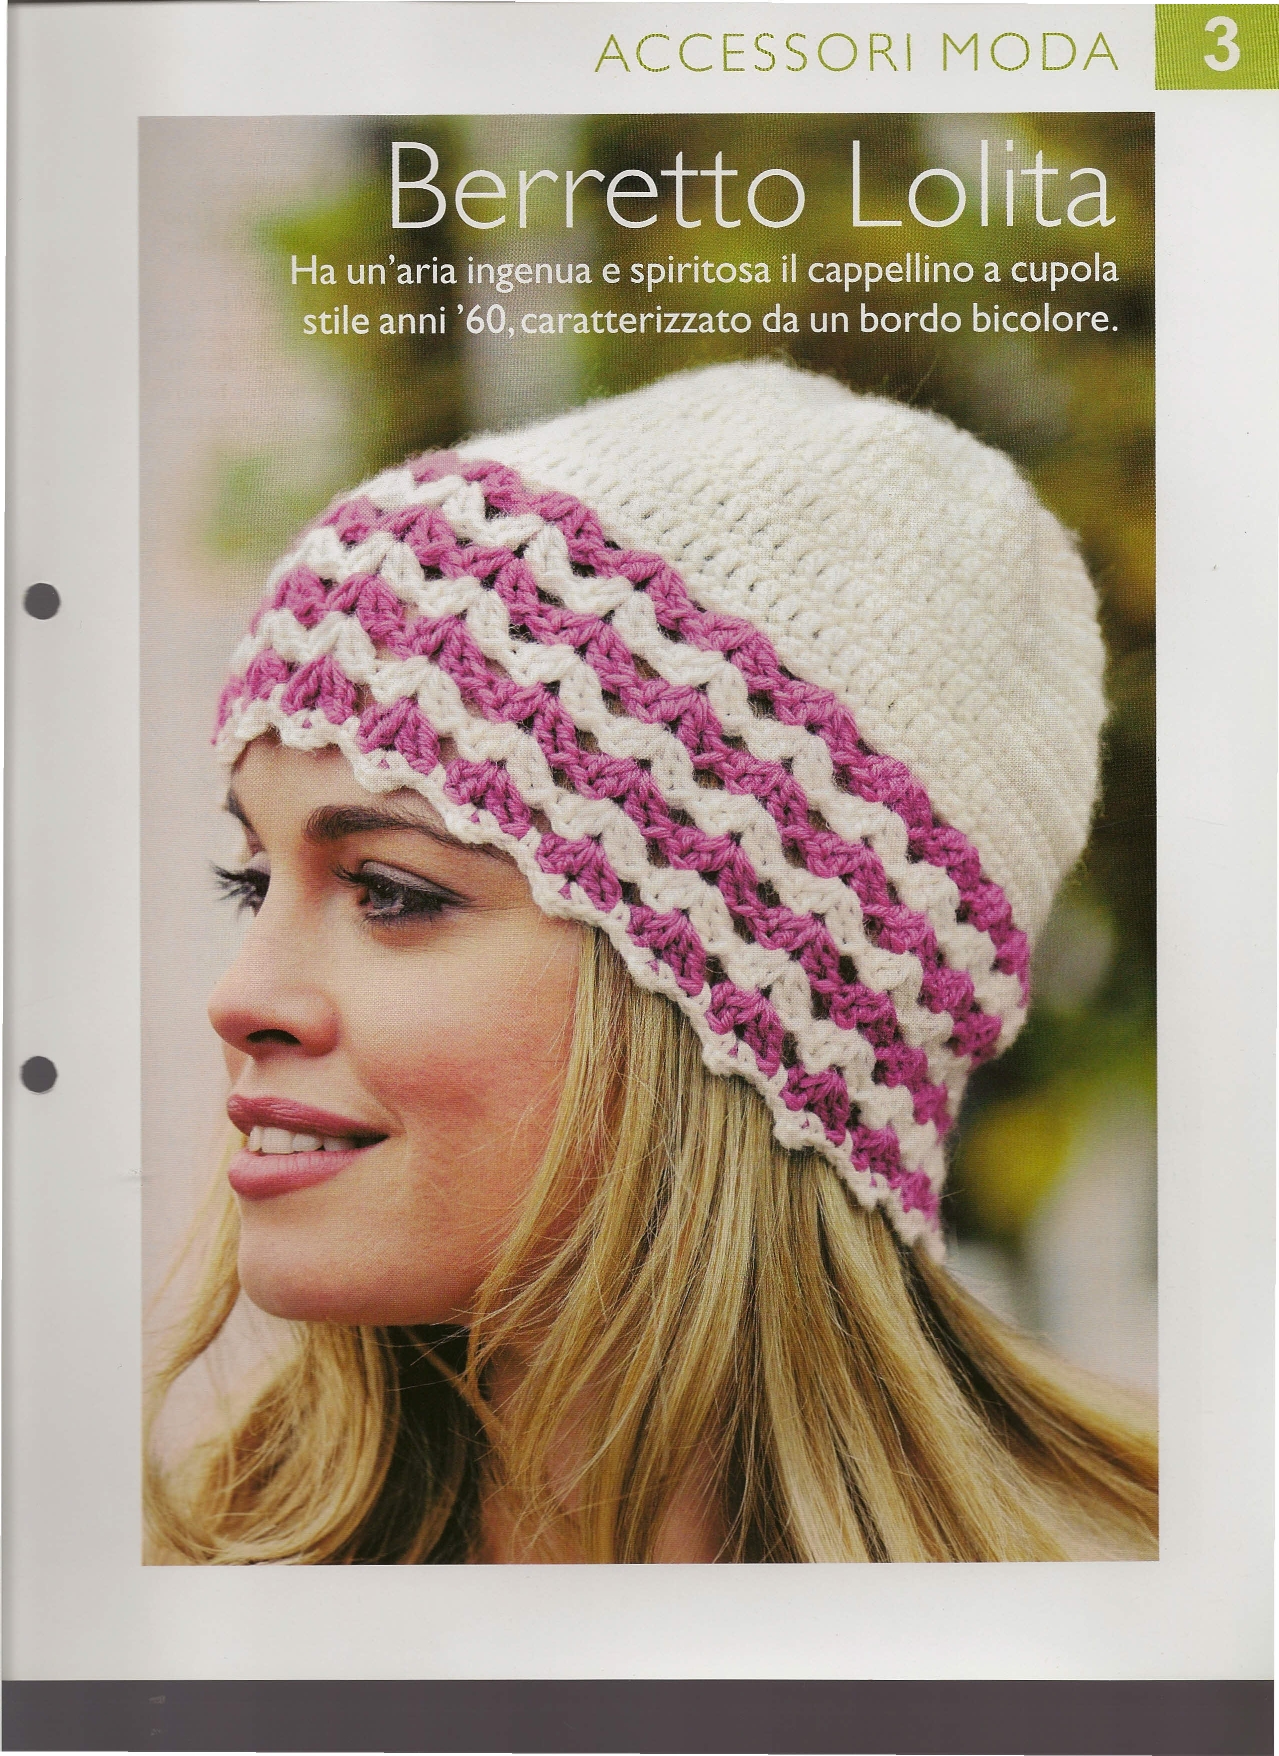 Crochet hat woman lolita (1)